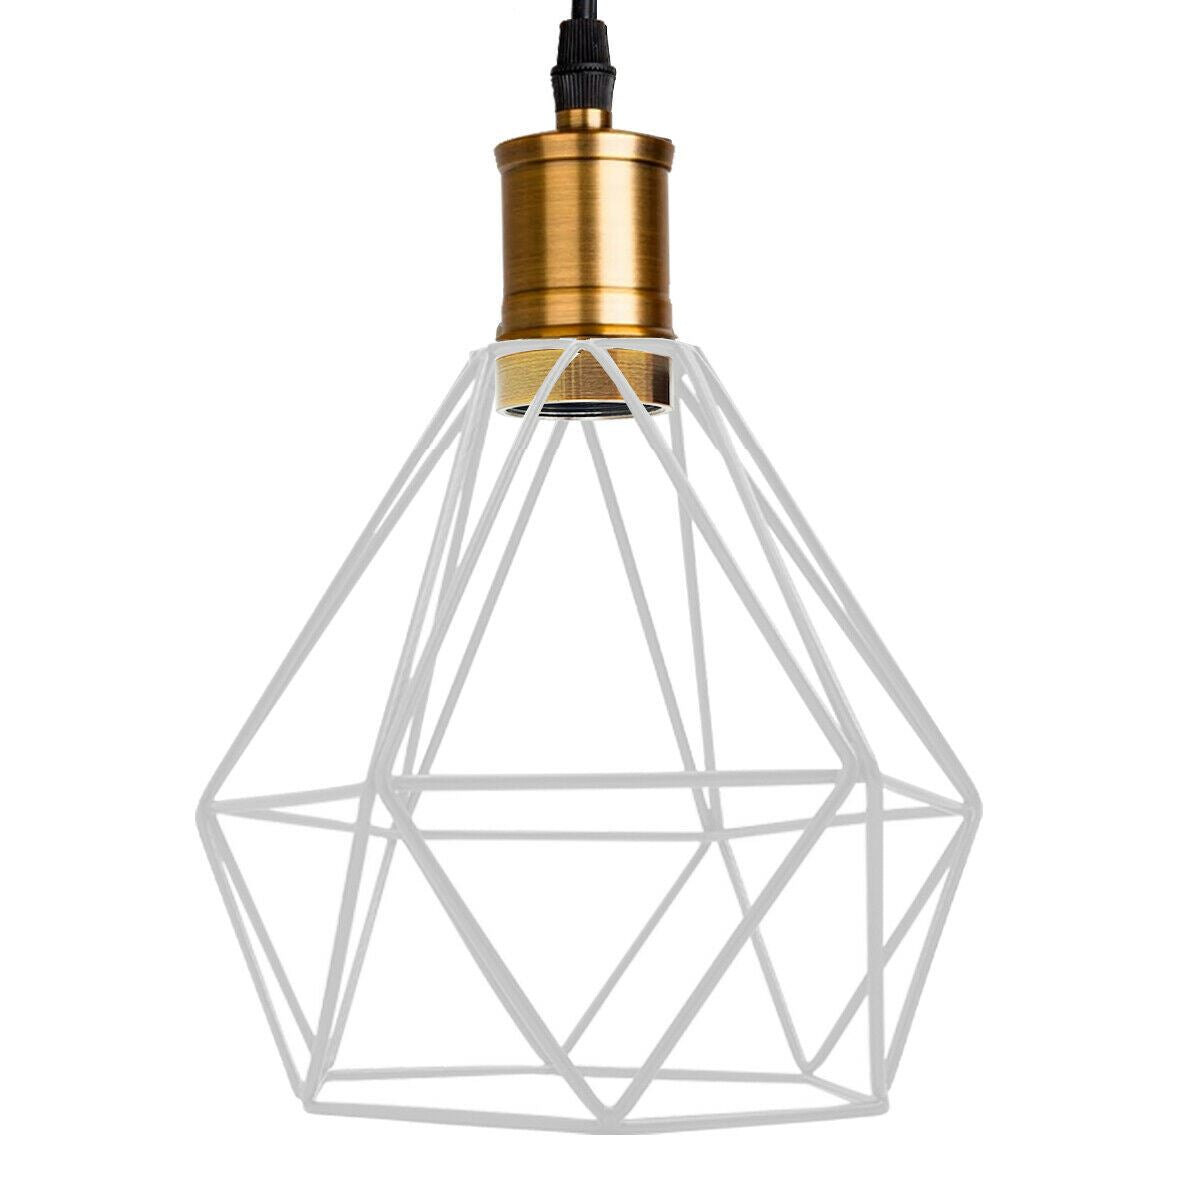 Industrial Retro style 3-Light Pendant lights Adjustable Cord with Diamond Metal Cages~1255 - LEDSone UK Ltd